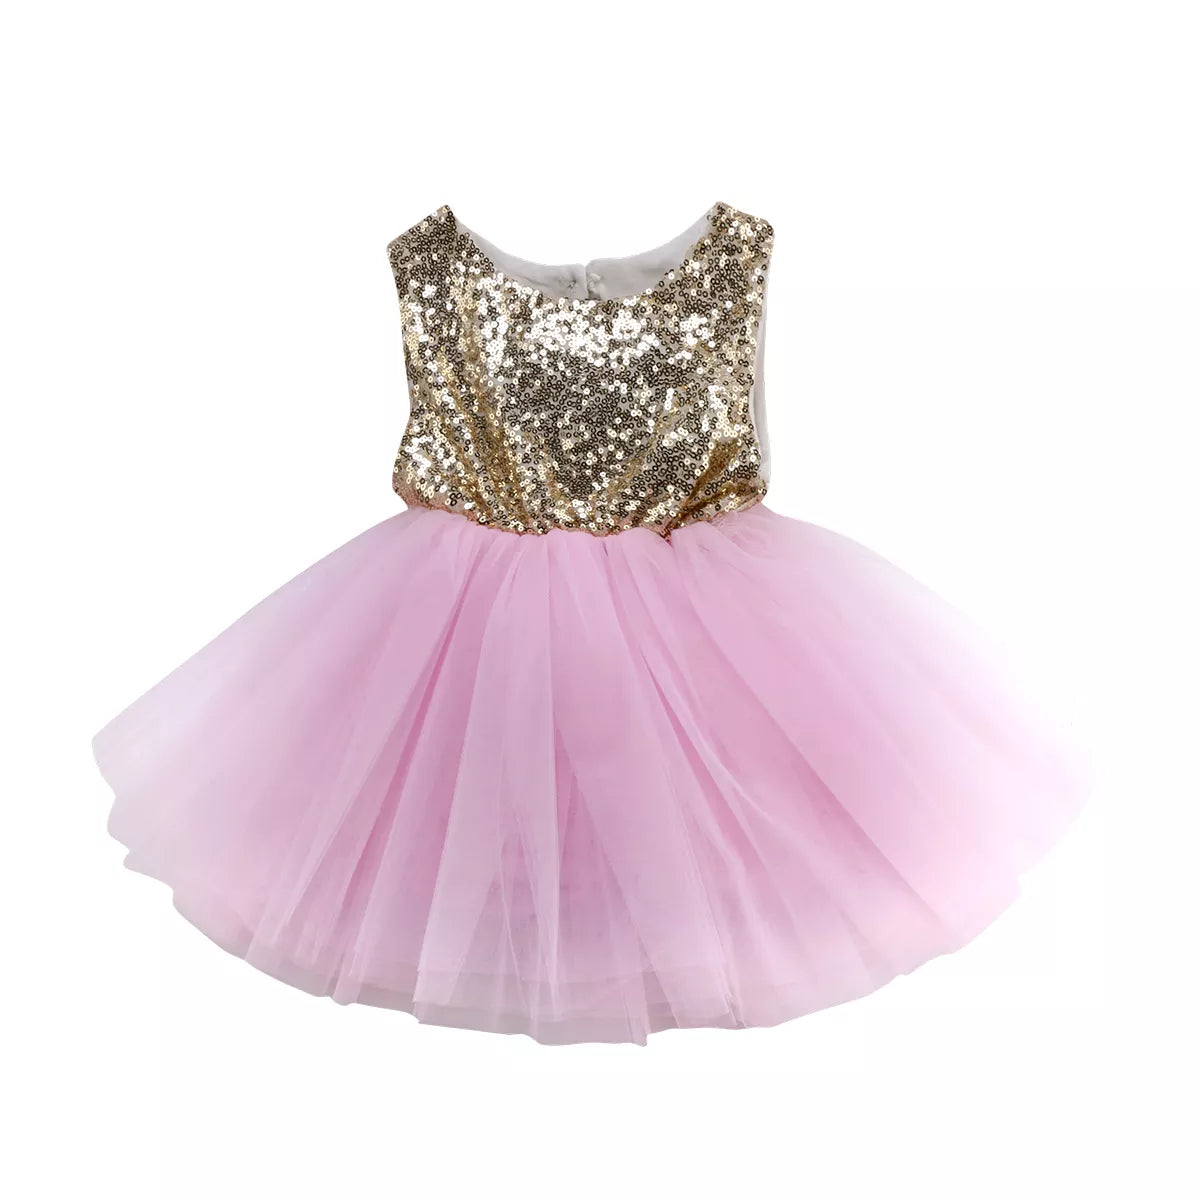 Baby Girl Black Tutu Dress toddler Ball Gown With Tulle Skirt Pink by Baby Minaj Cruz